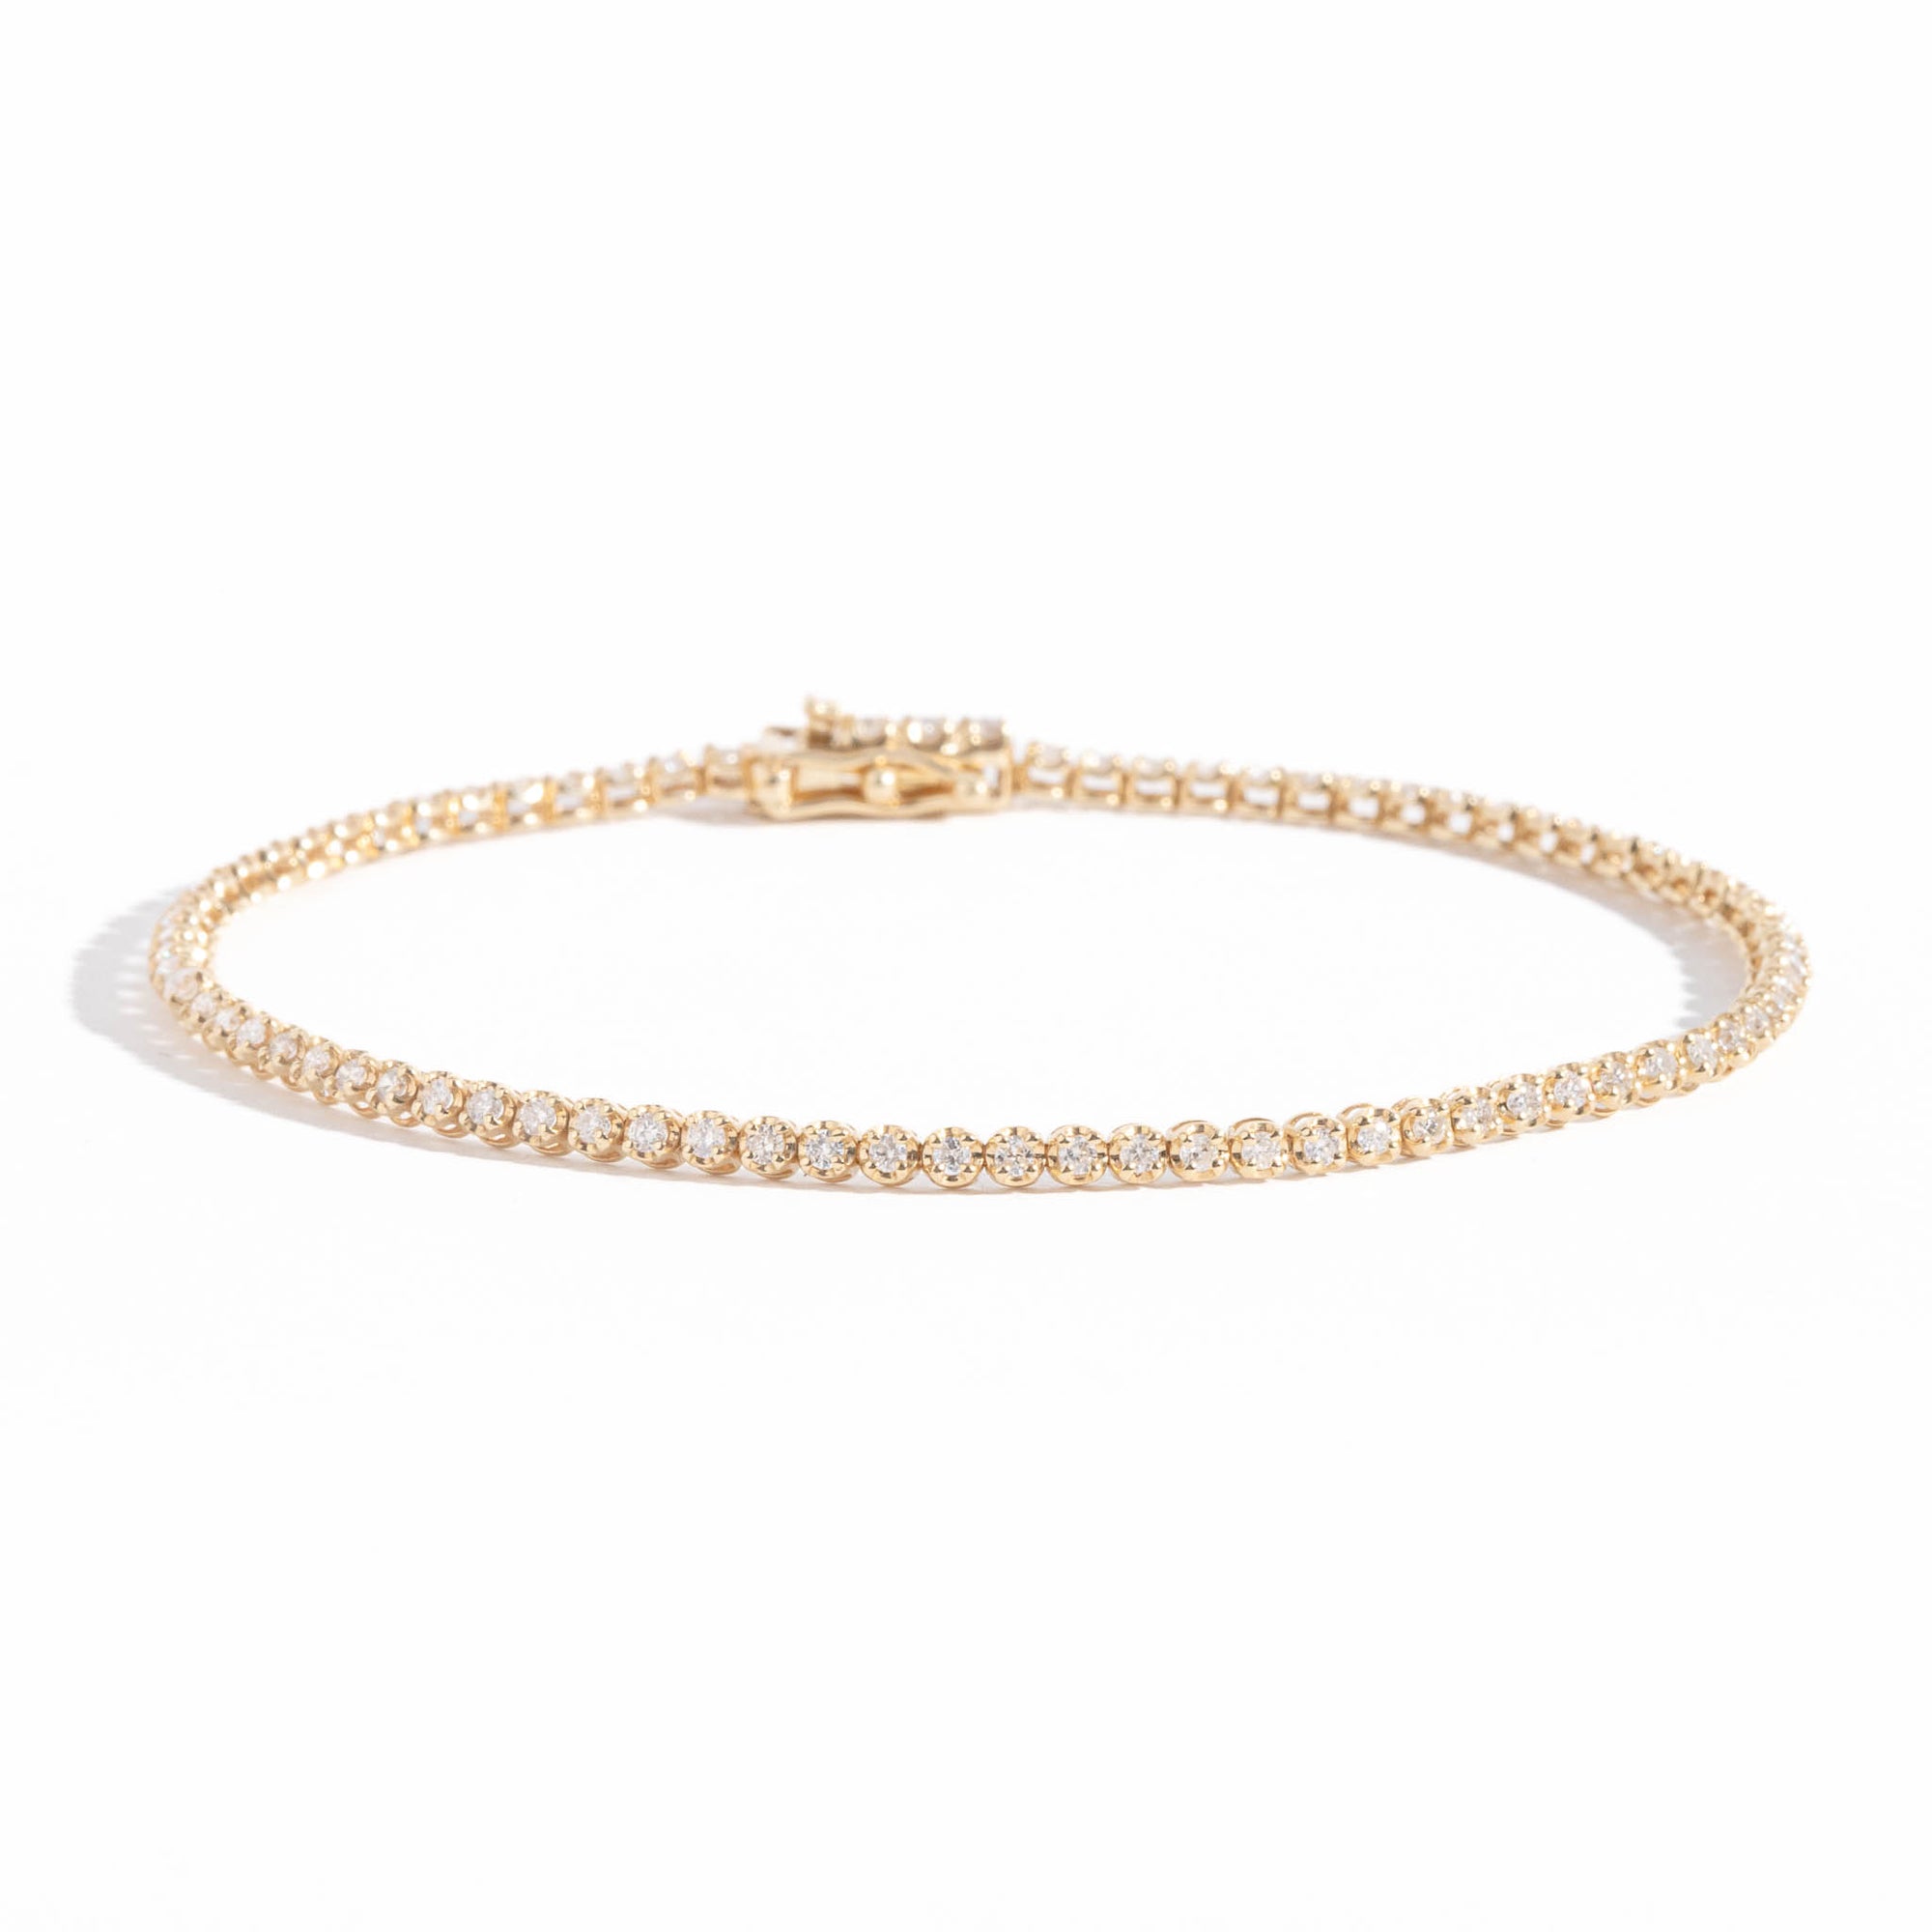 White Diamond Tennis Bracelet in 14 carat yellow gold